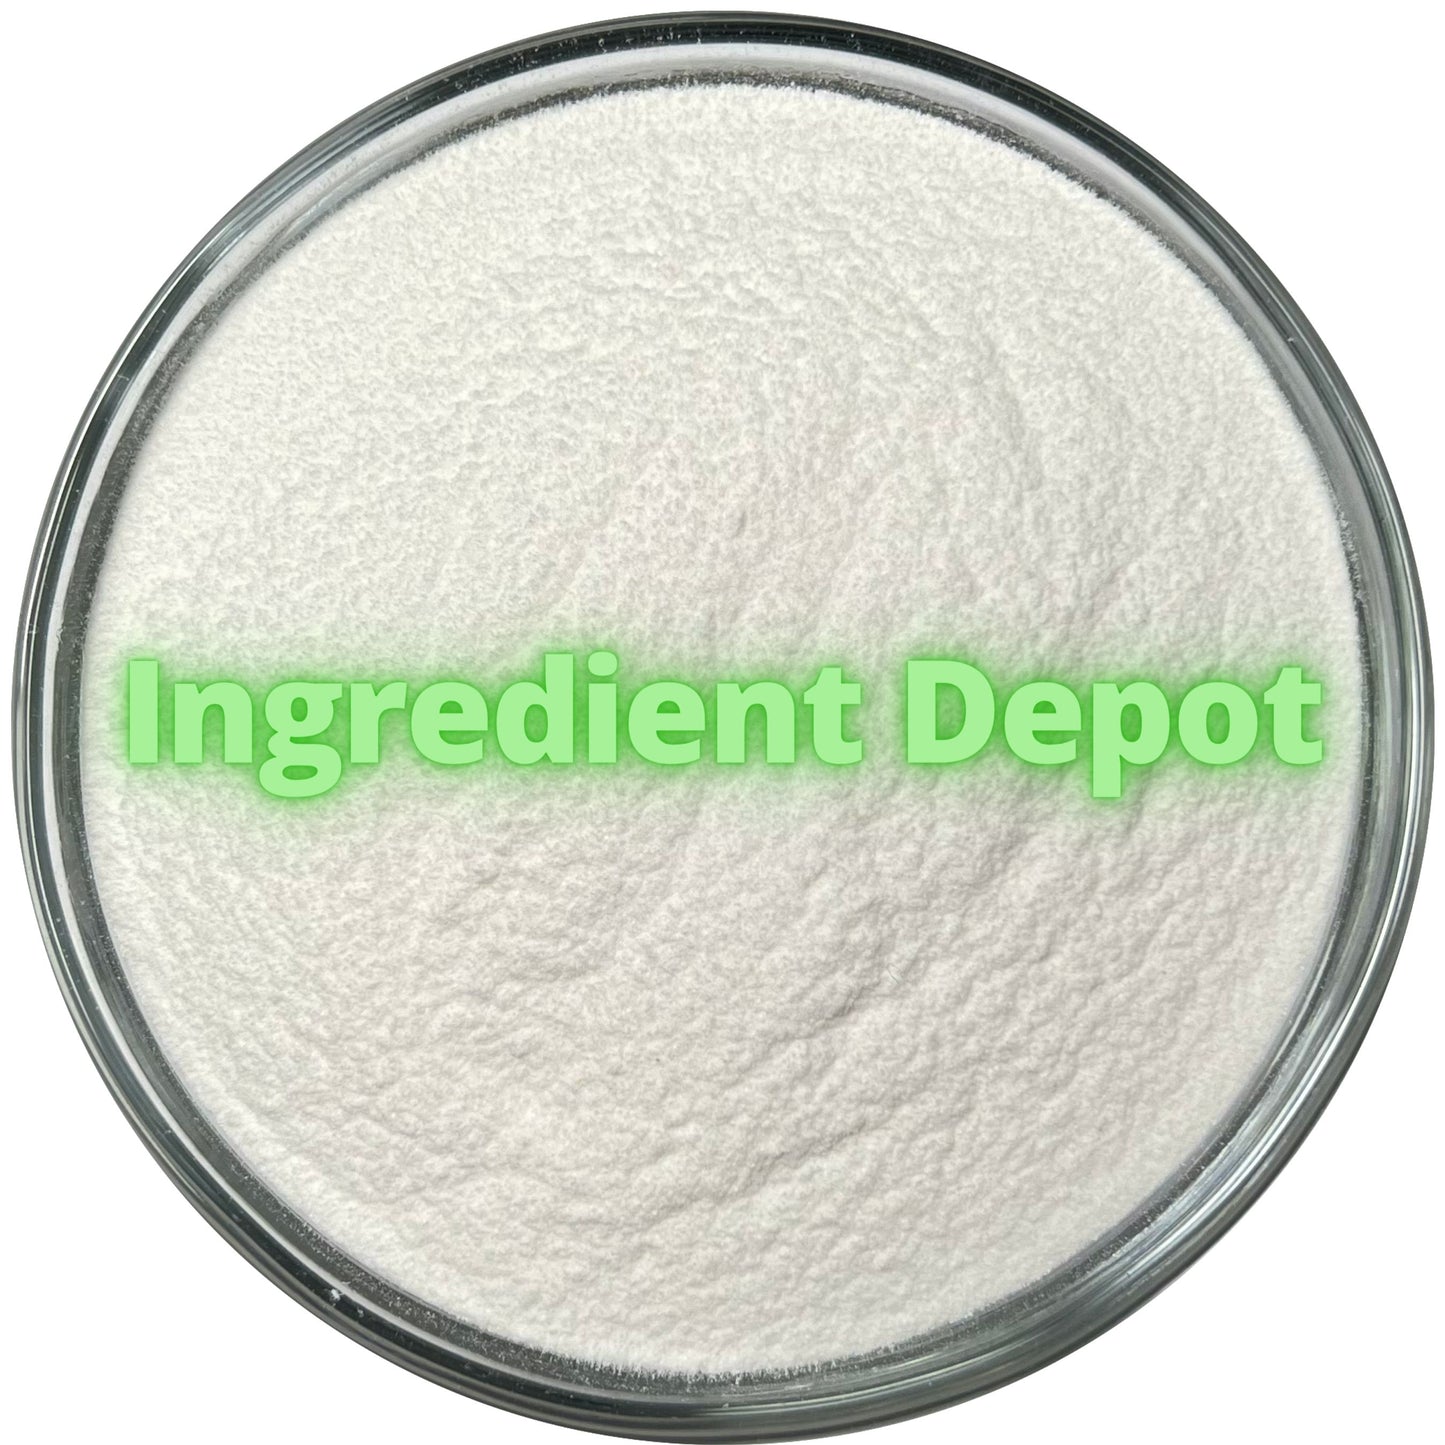 MCC 102 Microcrystalline Cellulose 2 kgs - IngredientDepot.com